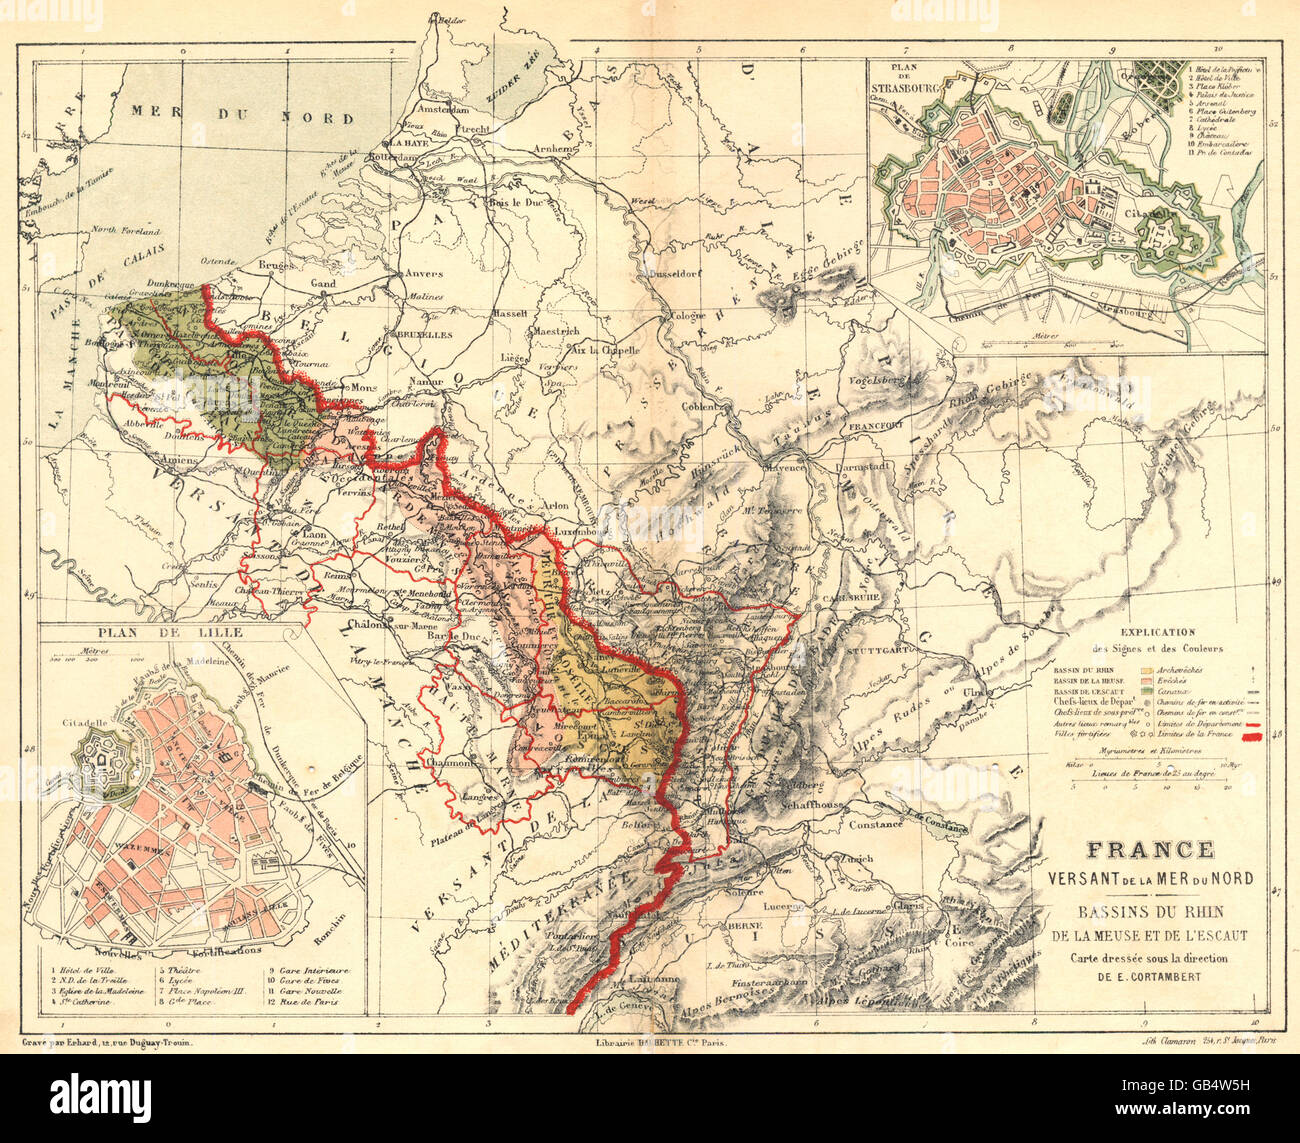 FRANCE: Versant Mer Nord Bassins Rhin Meuse Escaut; Strasbourg; Lille, 1880 map Stock Photo